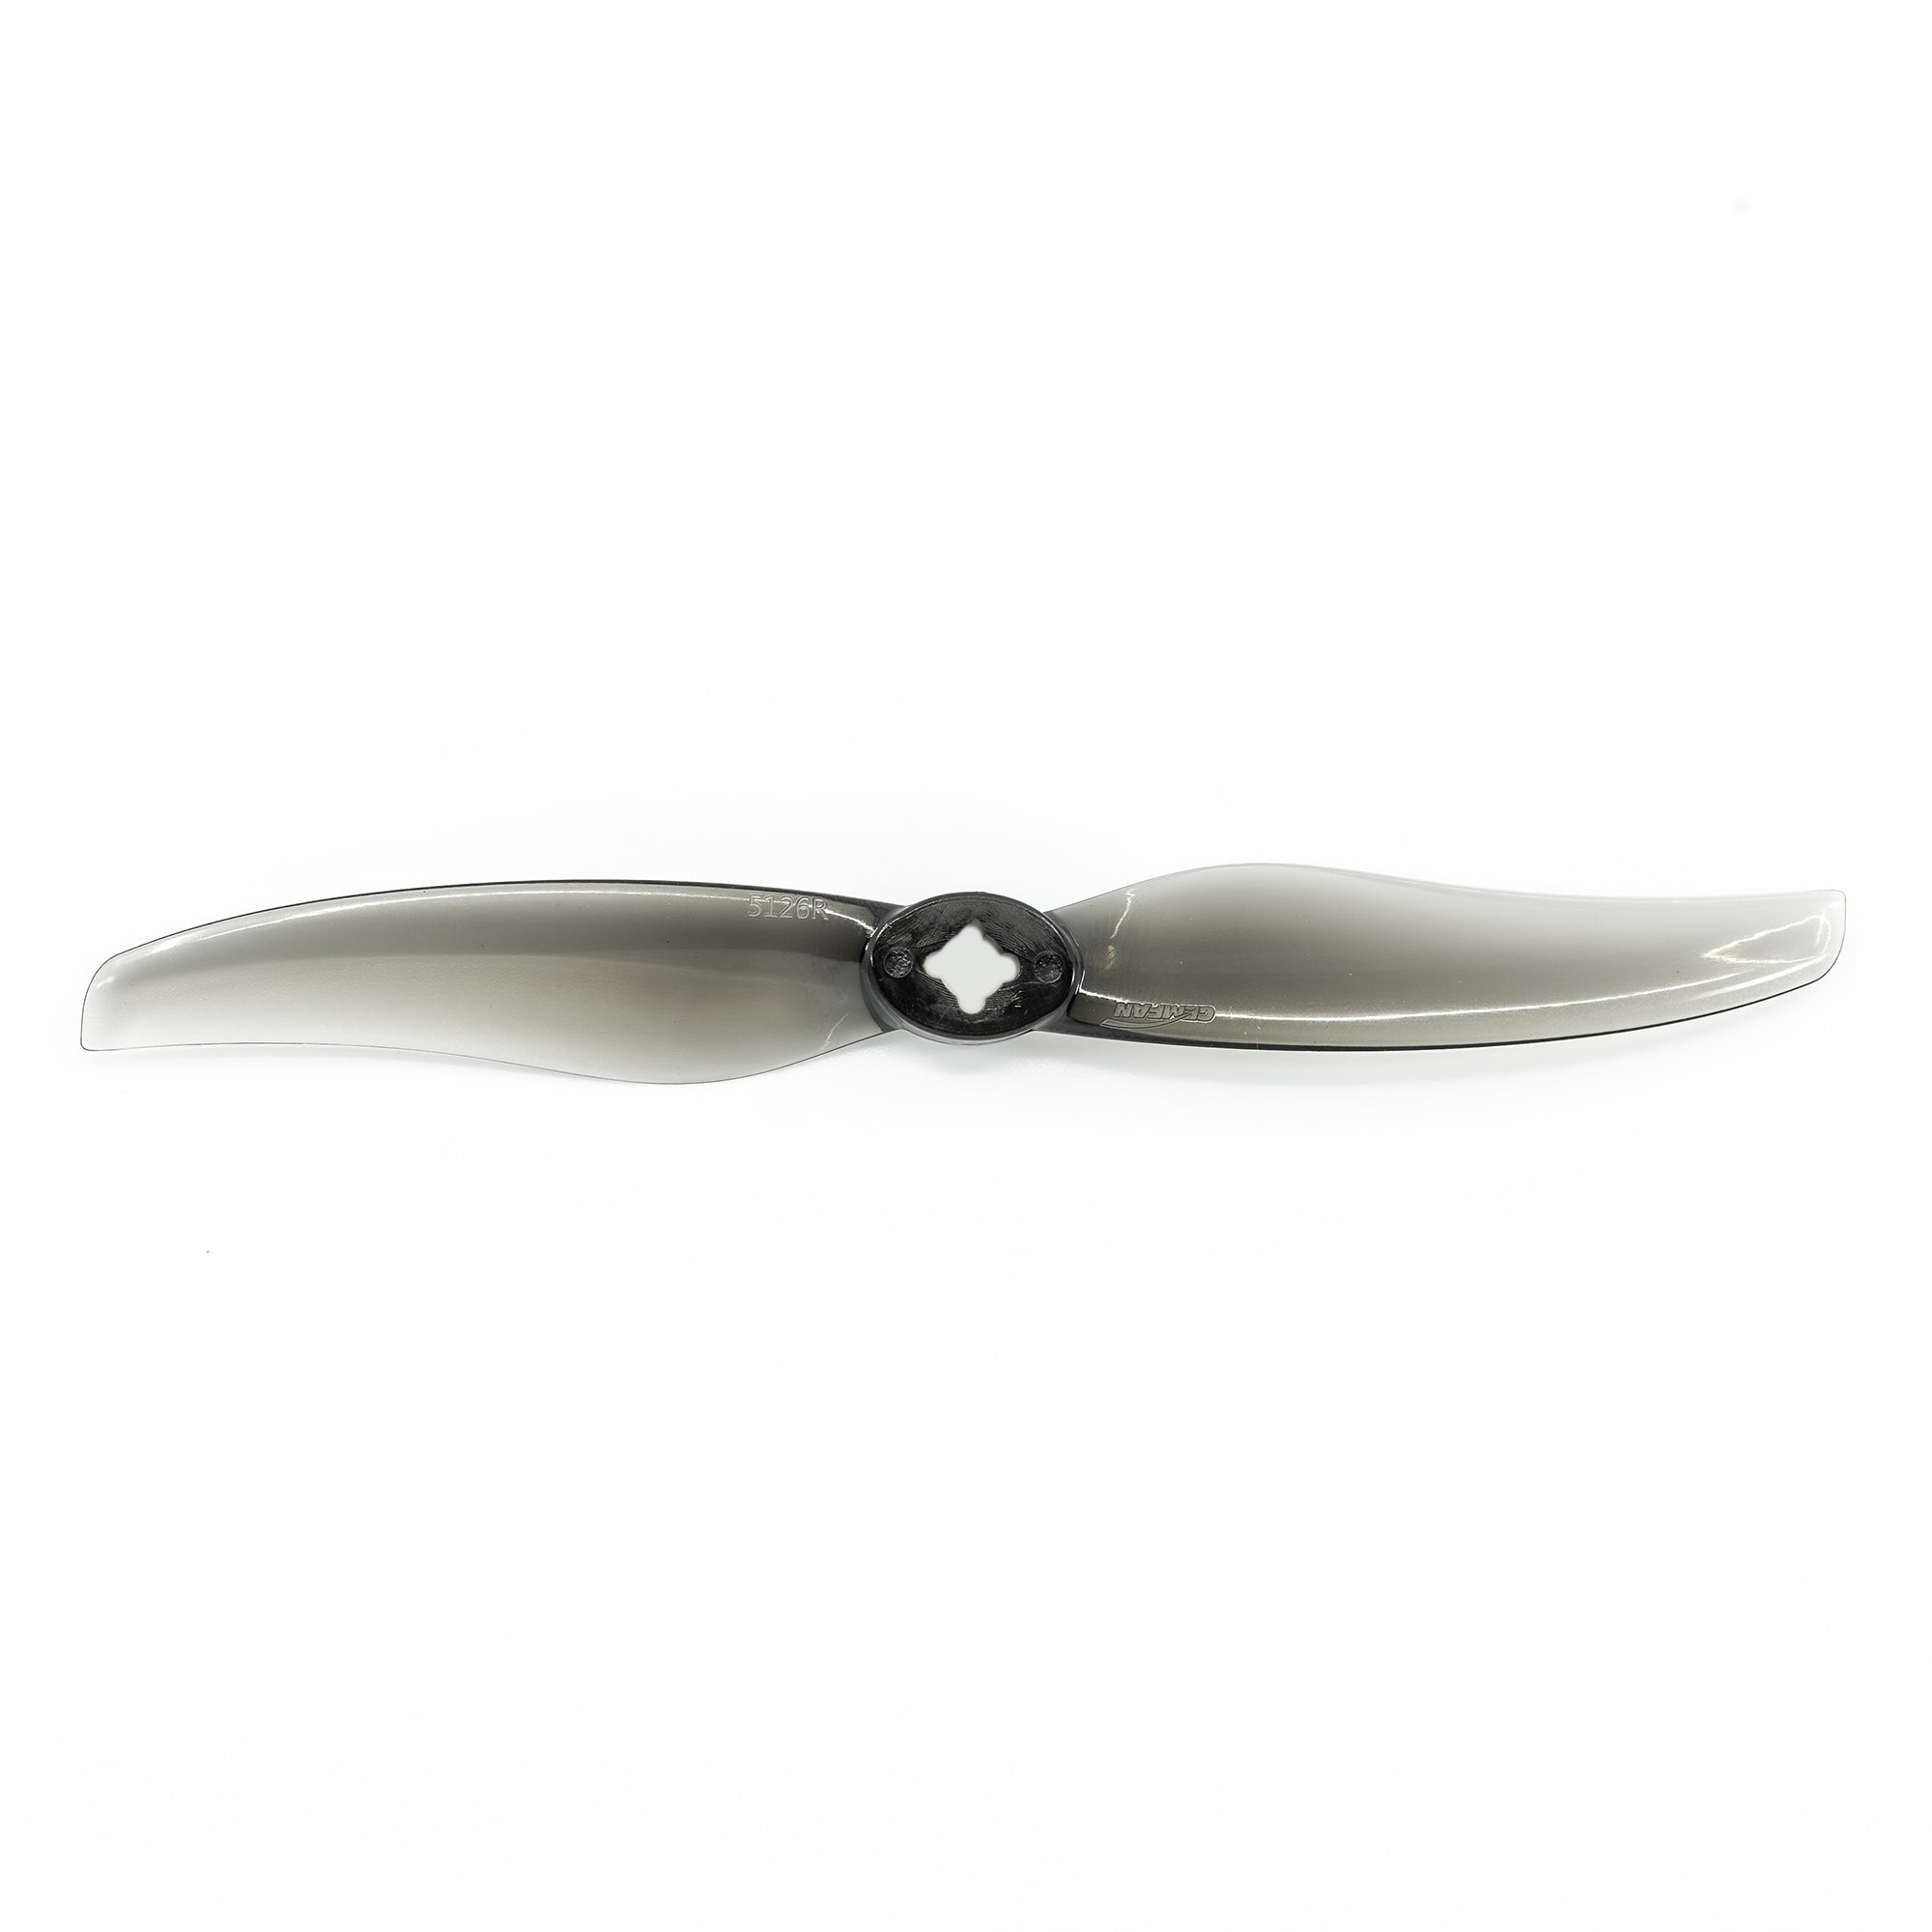 Gemfan LR 5126 5.1" Durable 2 Blade Propeller w/M5 Adapters - 1.5mm Shaft (2CW + 2CCW)